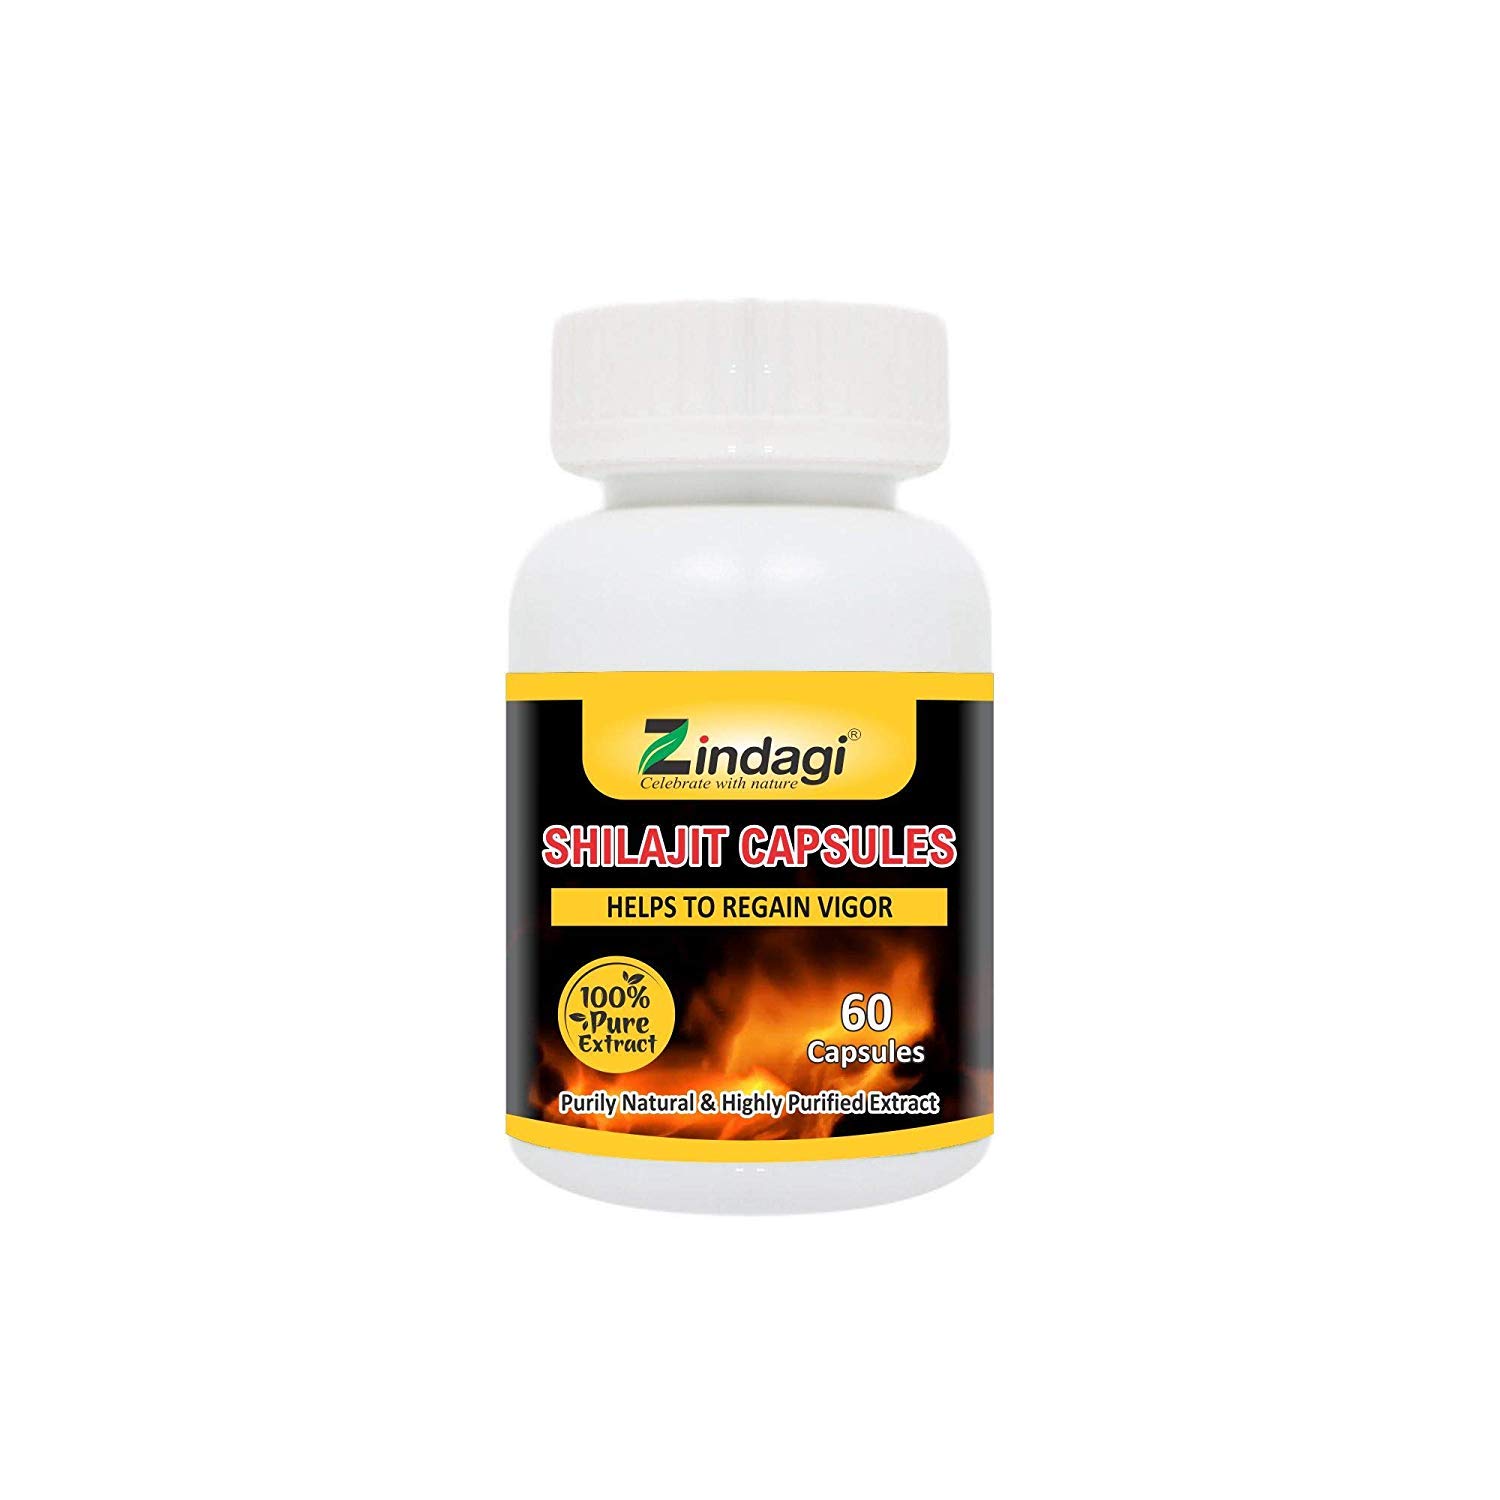 Buy Zindagi Shilajit Extract Capsules - Strength & Stamina for Men - 100% Natural & Pure Shilajit Extract (60 Capsules) at Best Price Online